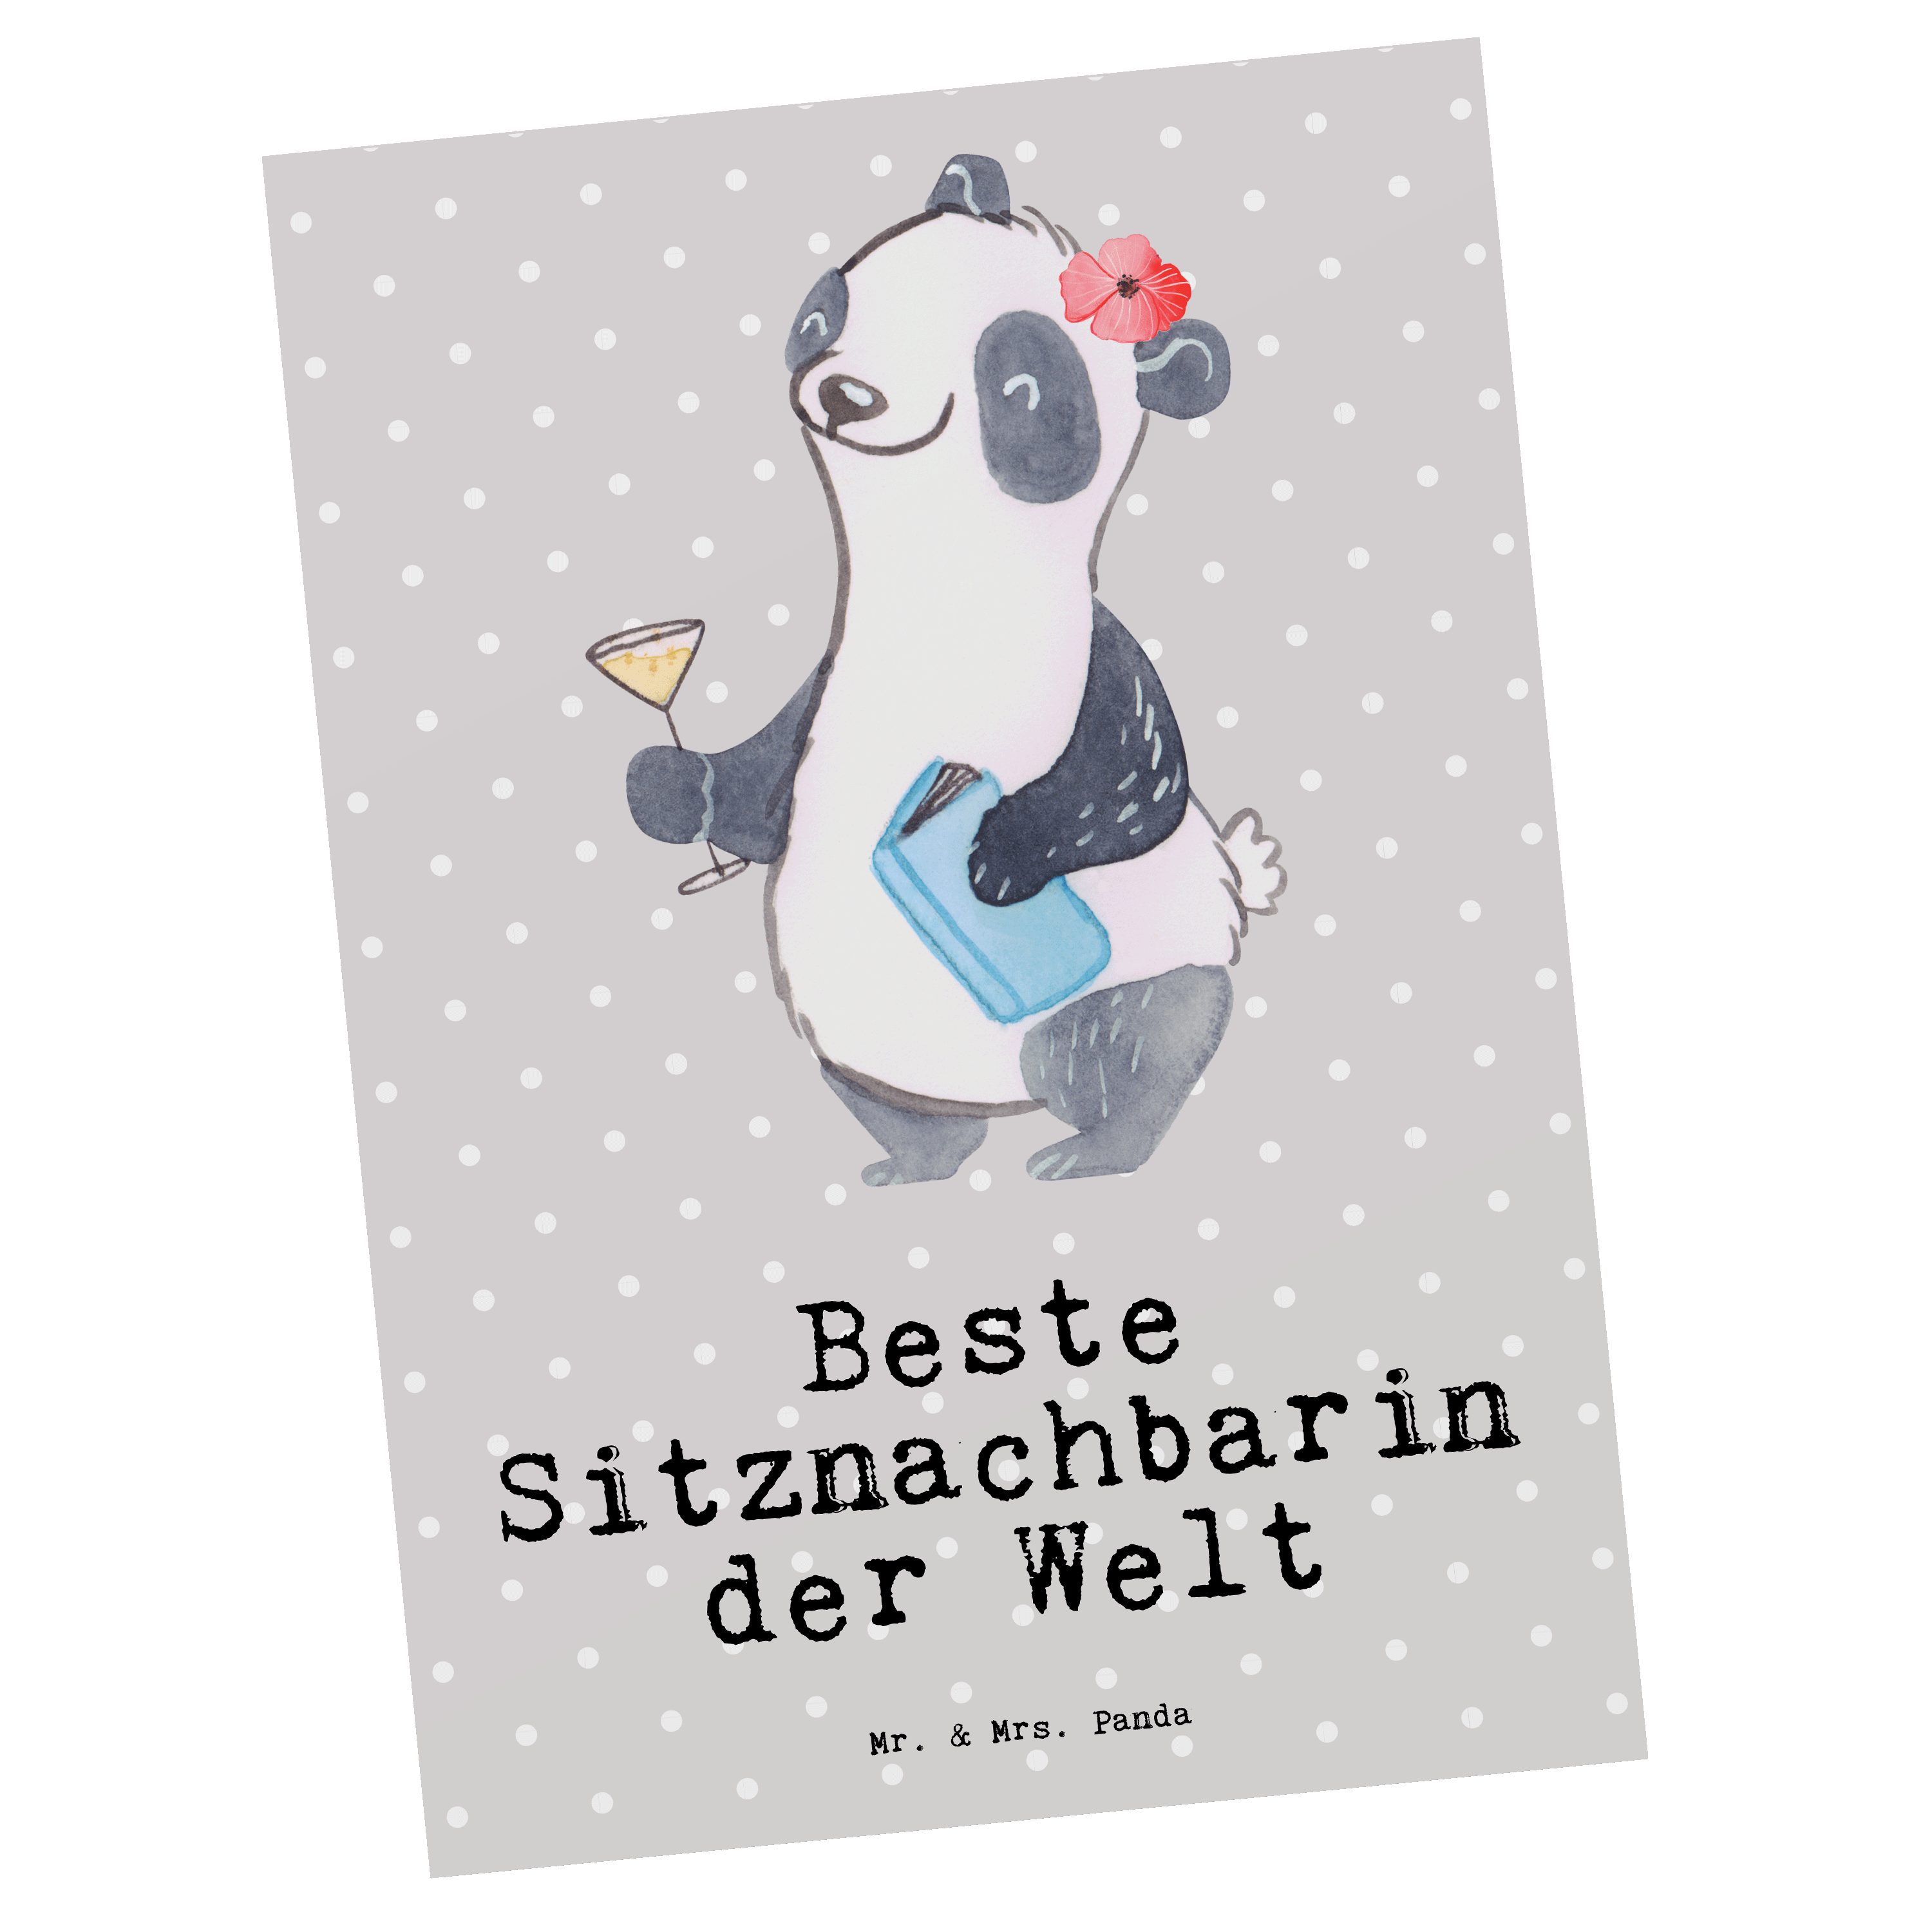 Geschen Geschenk, Welt Panda Grau Postkarte - der Sitznachbarin & Pastell Mr. - Beste Panda Mrs.